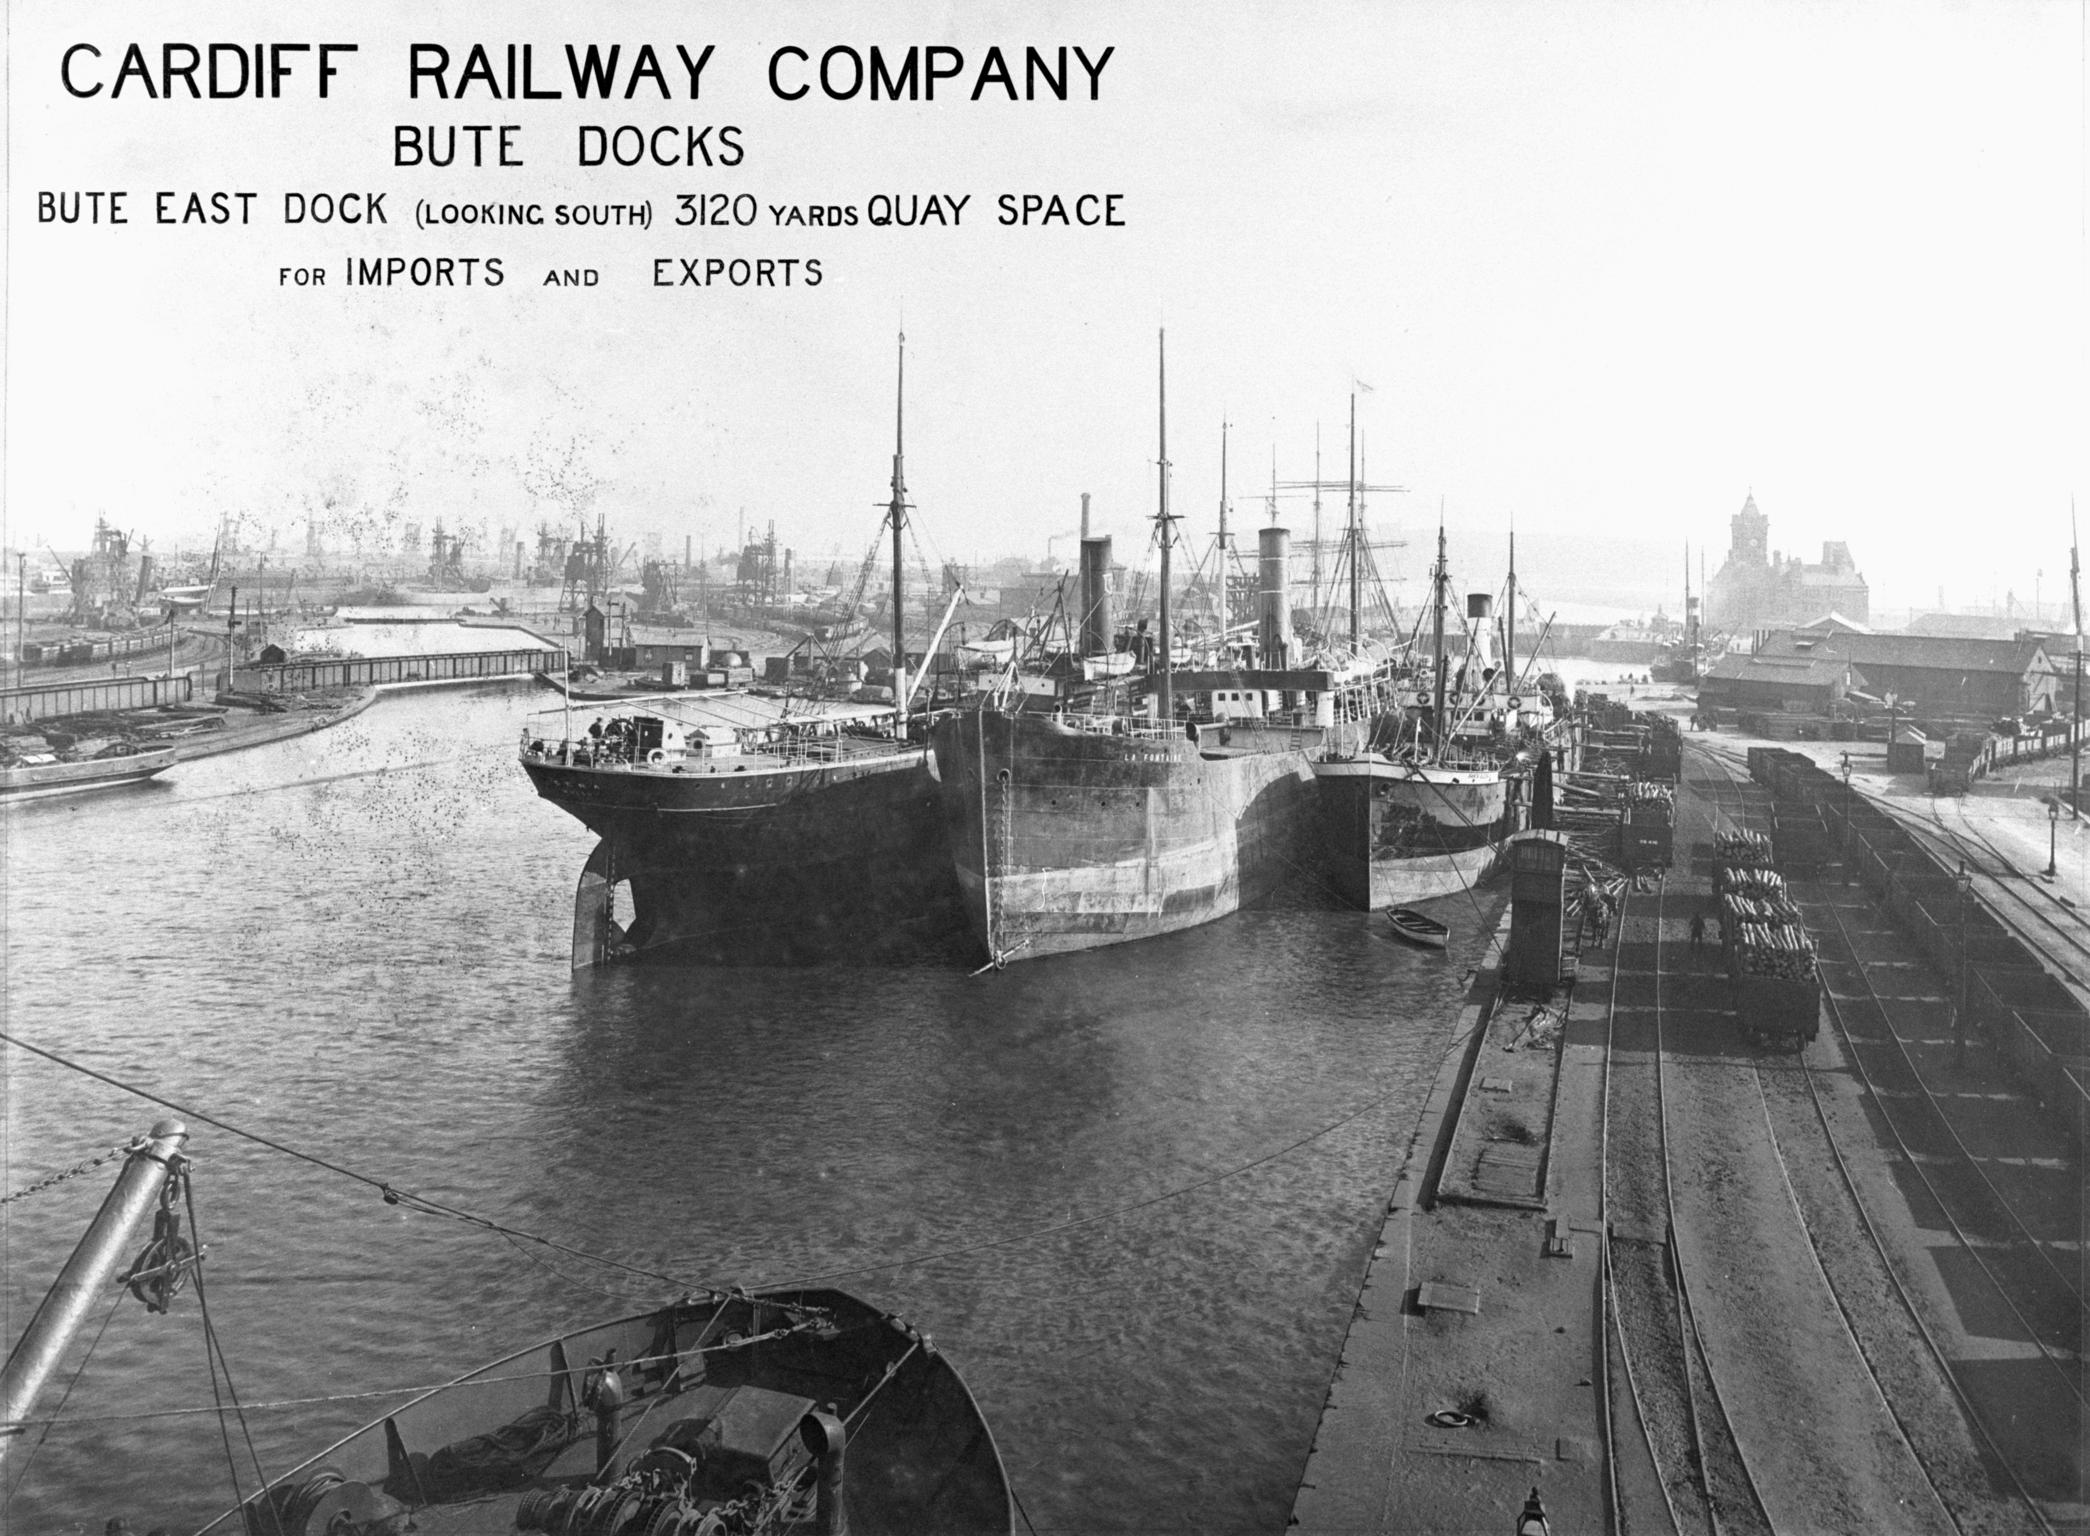 Cardiff Railway Company, Bute Docks (photo)